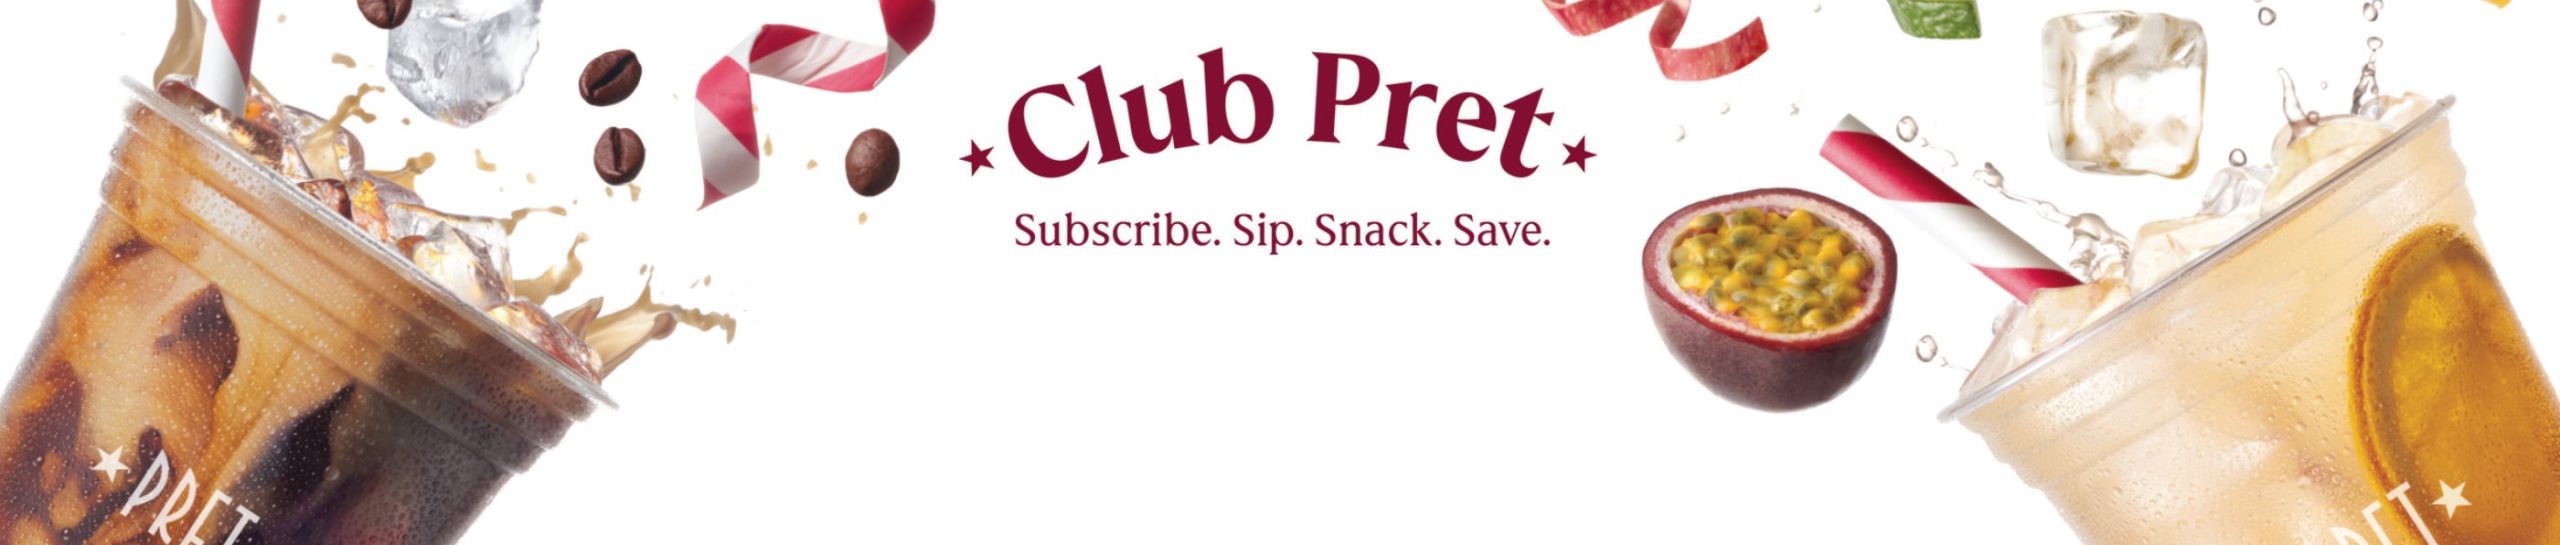 Club Pret